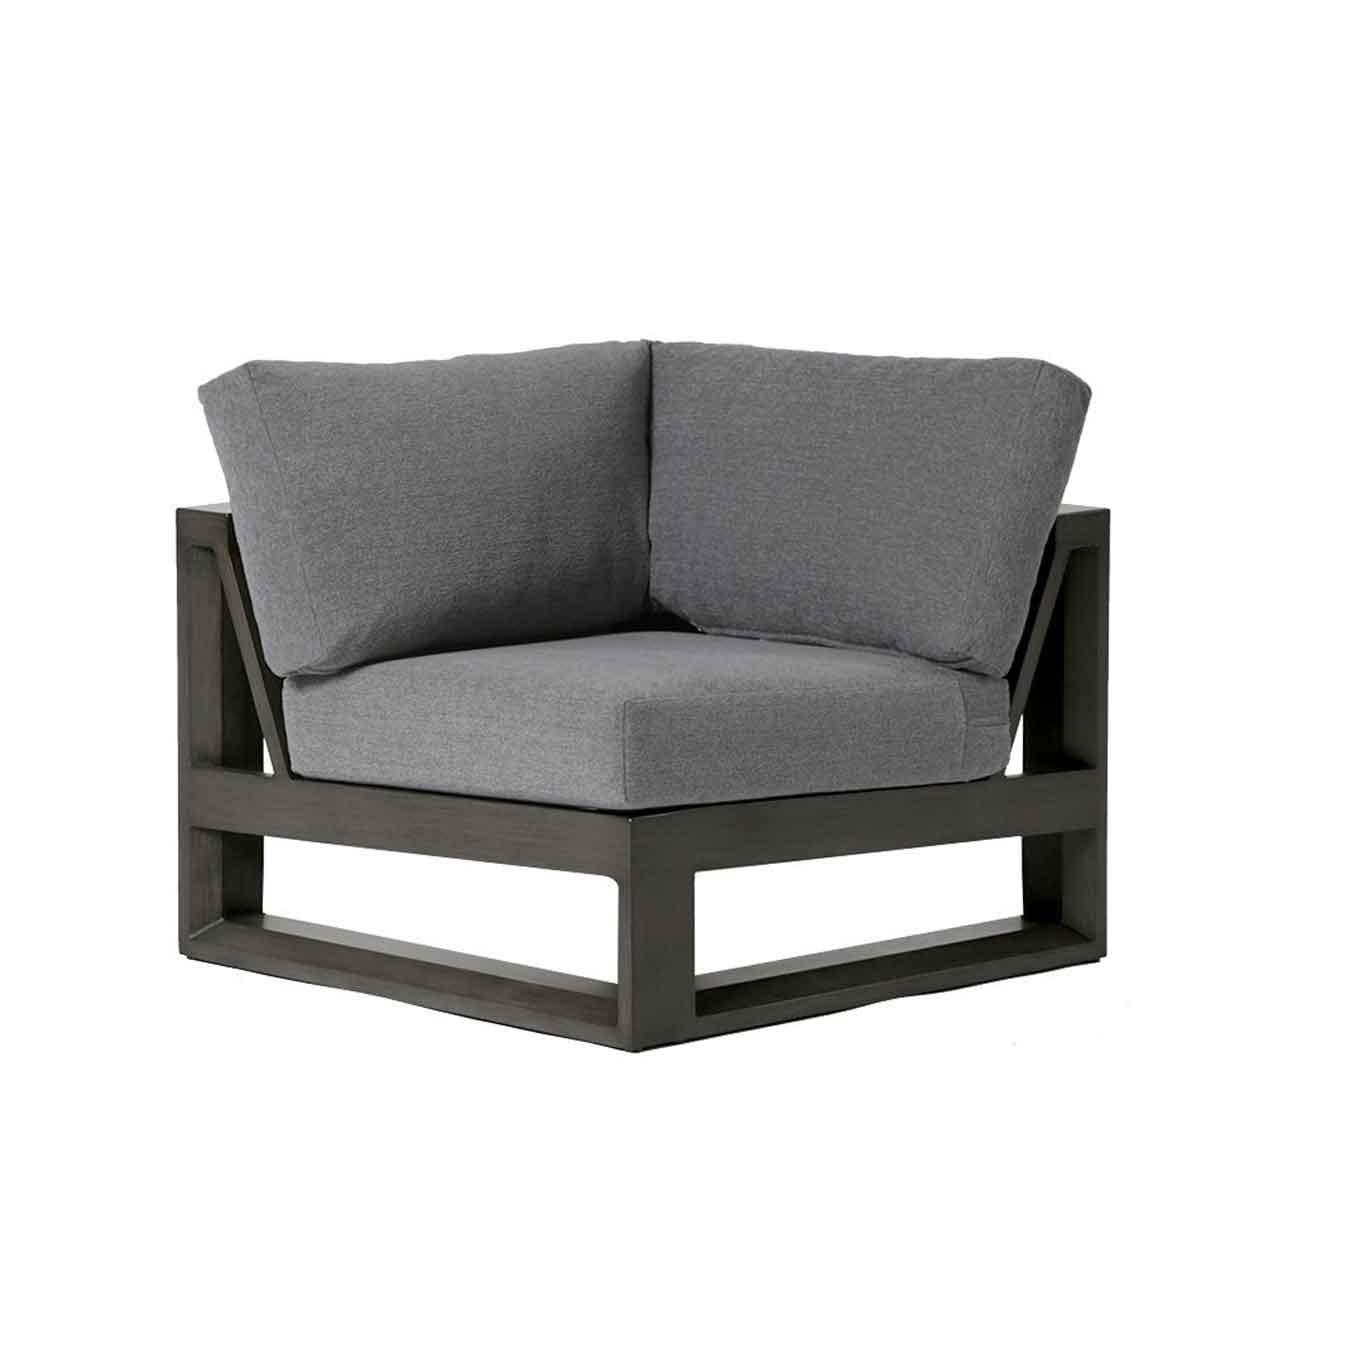 Element 5.0 Corner Chair Section - Ash Grey